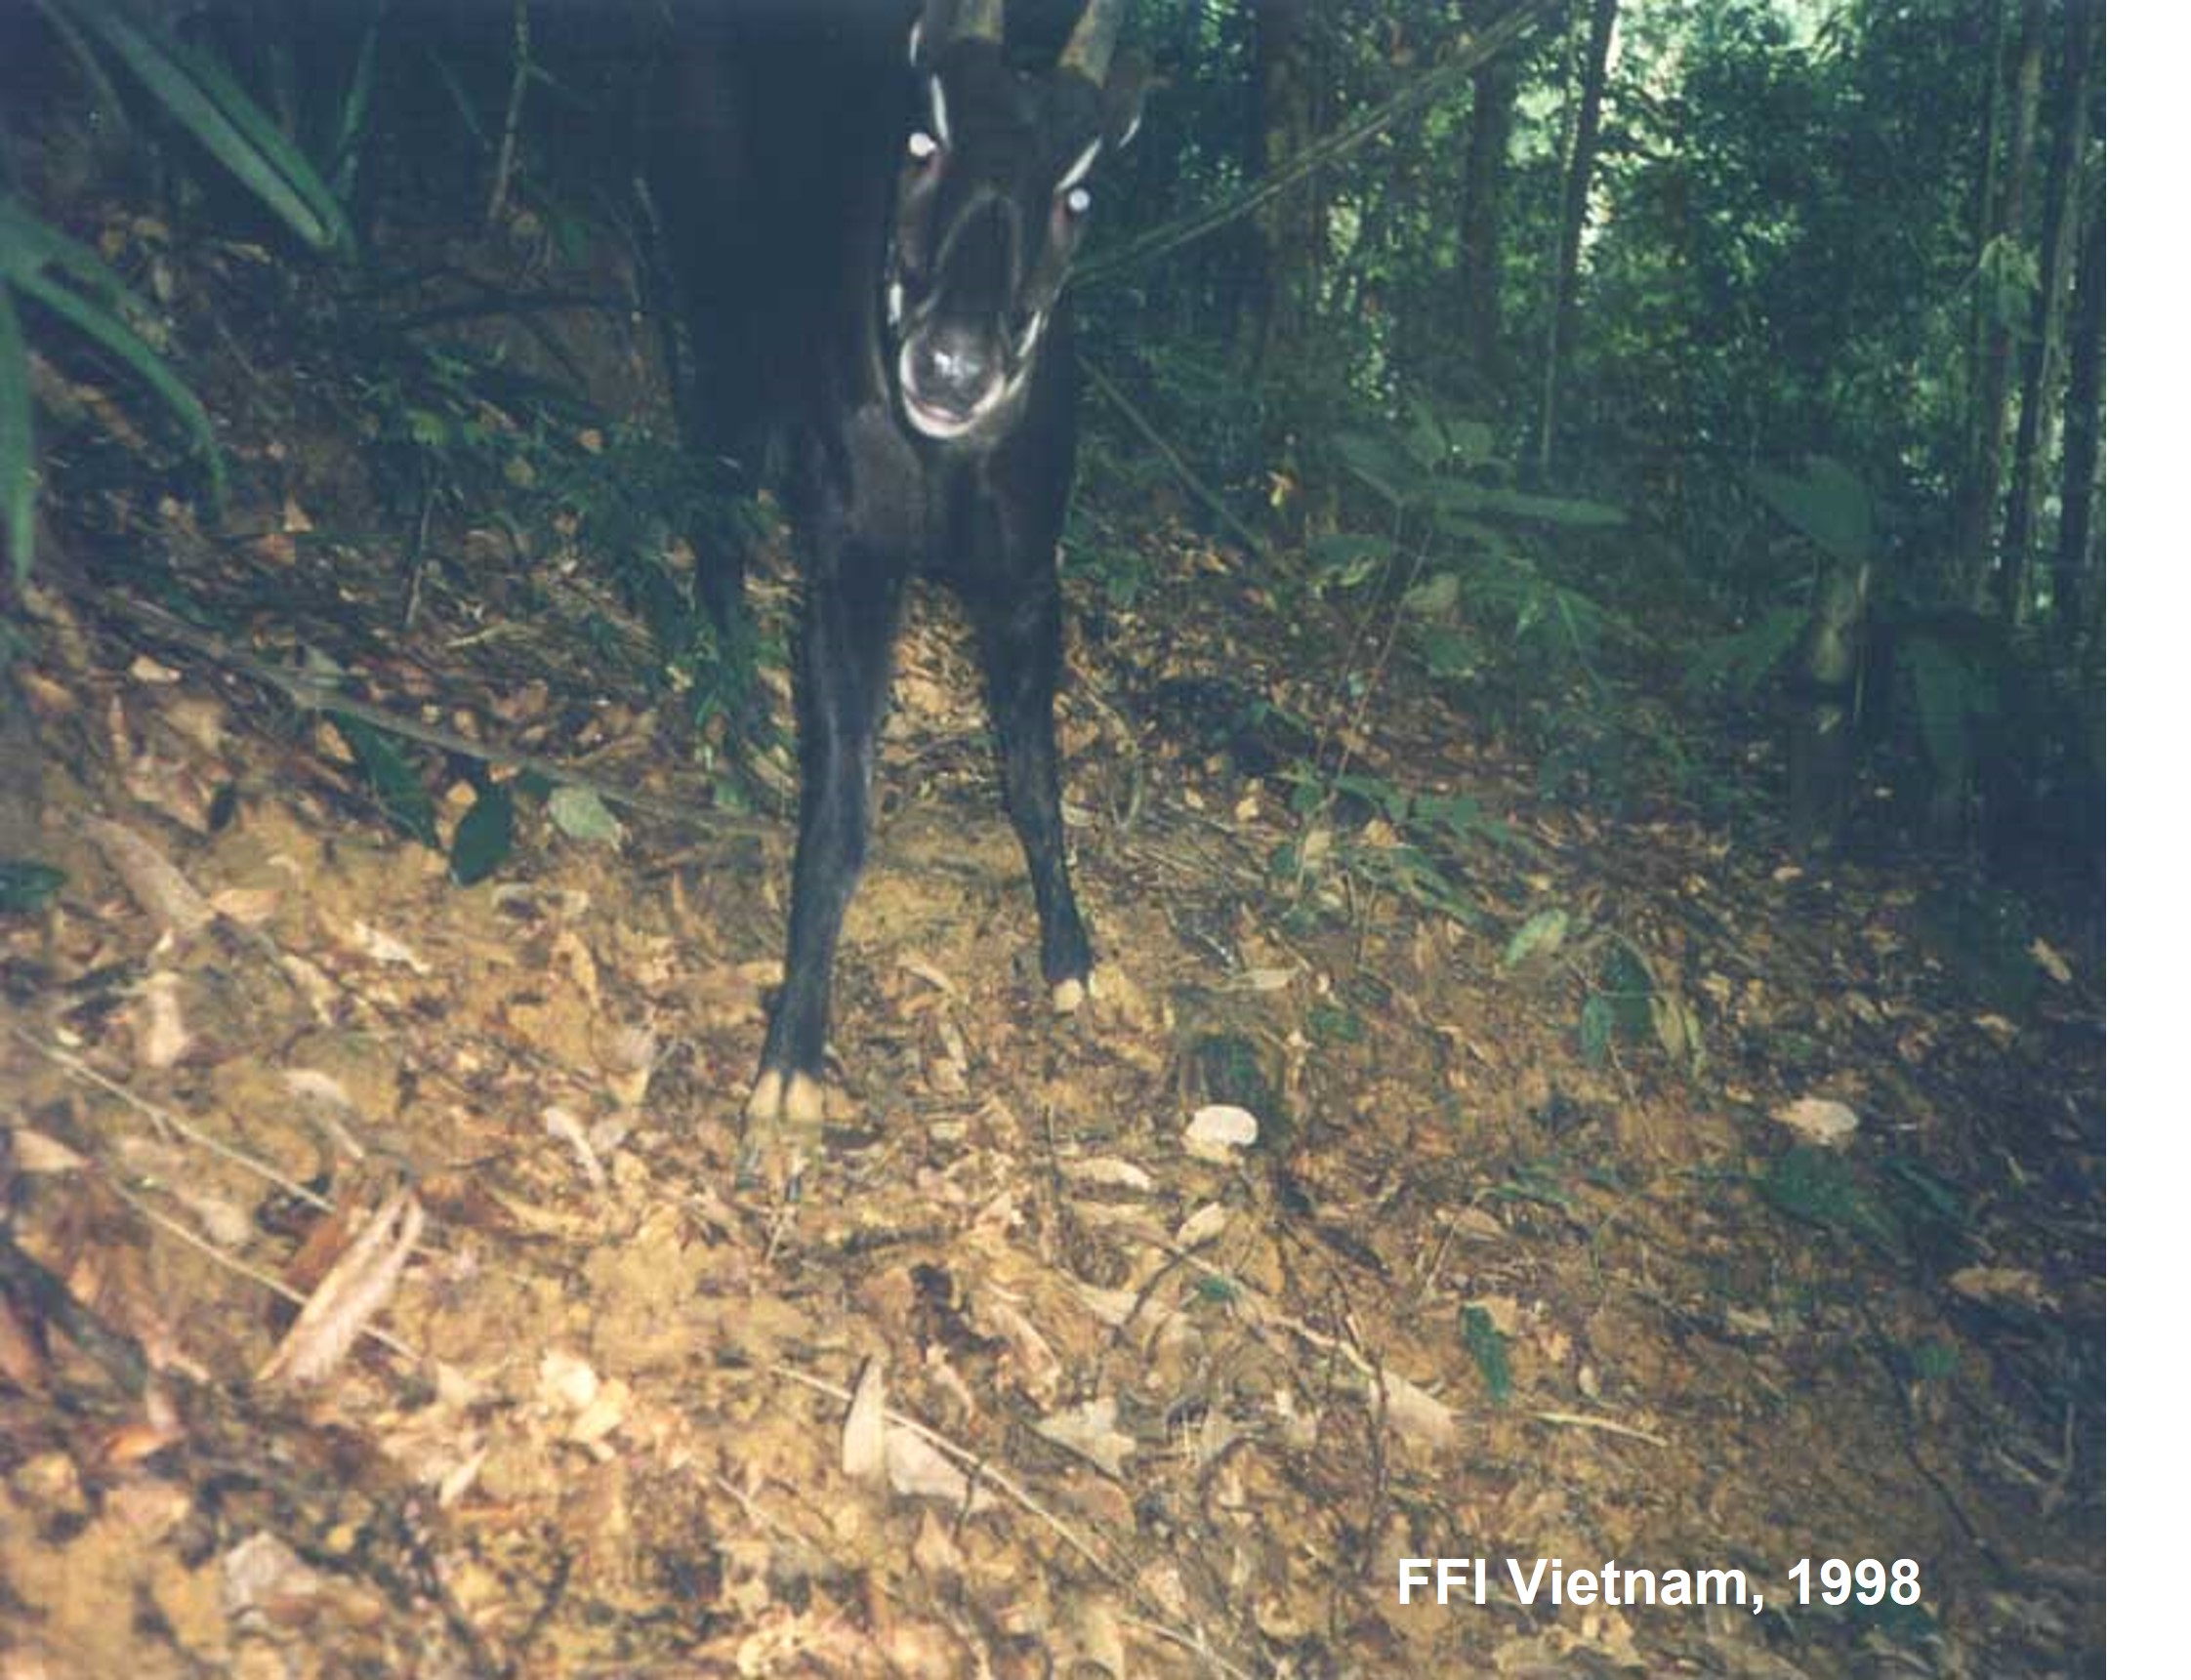 First wild pic of Saola, 1998, FFI Vietnam